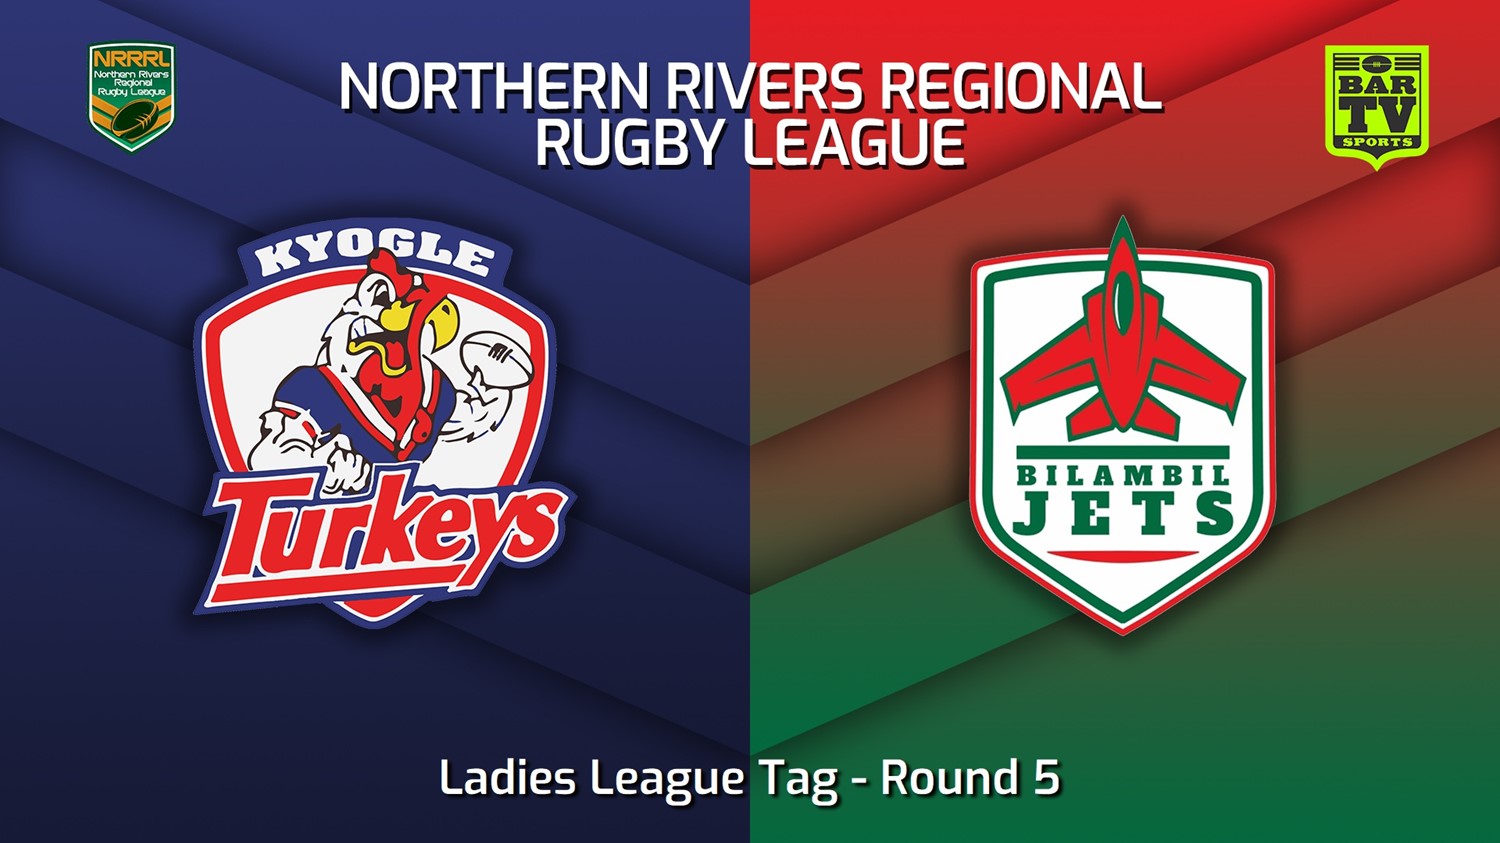 MINI GAME: Northern Rivers Round 5 - Ladies League Tag - Kyogle Turkeys v Bilambil Jets Slate Image